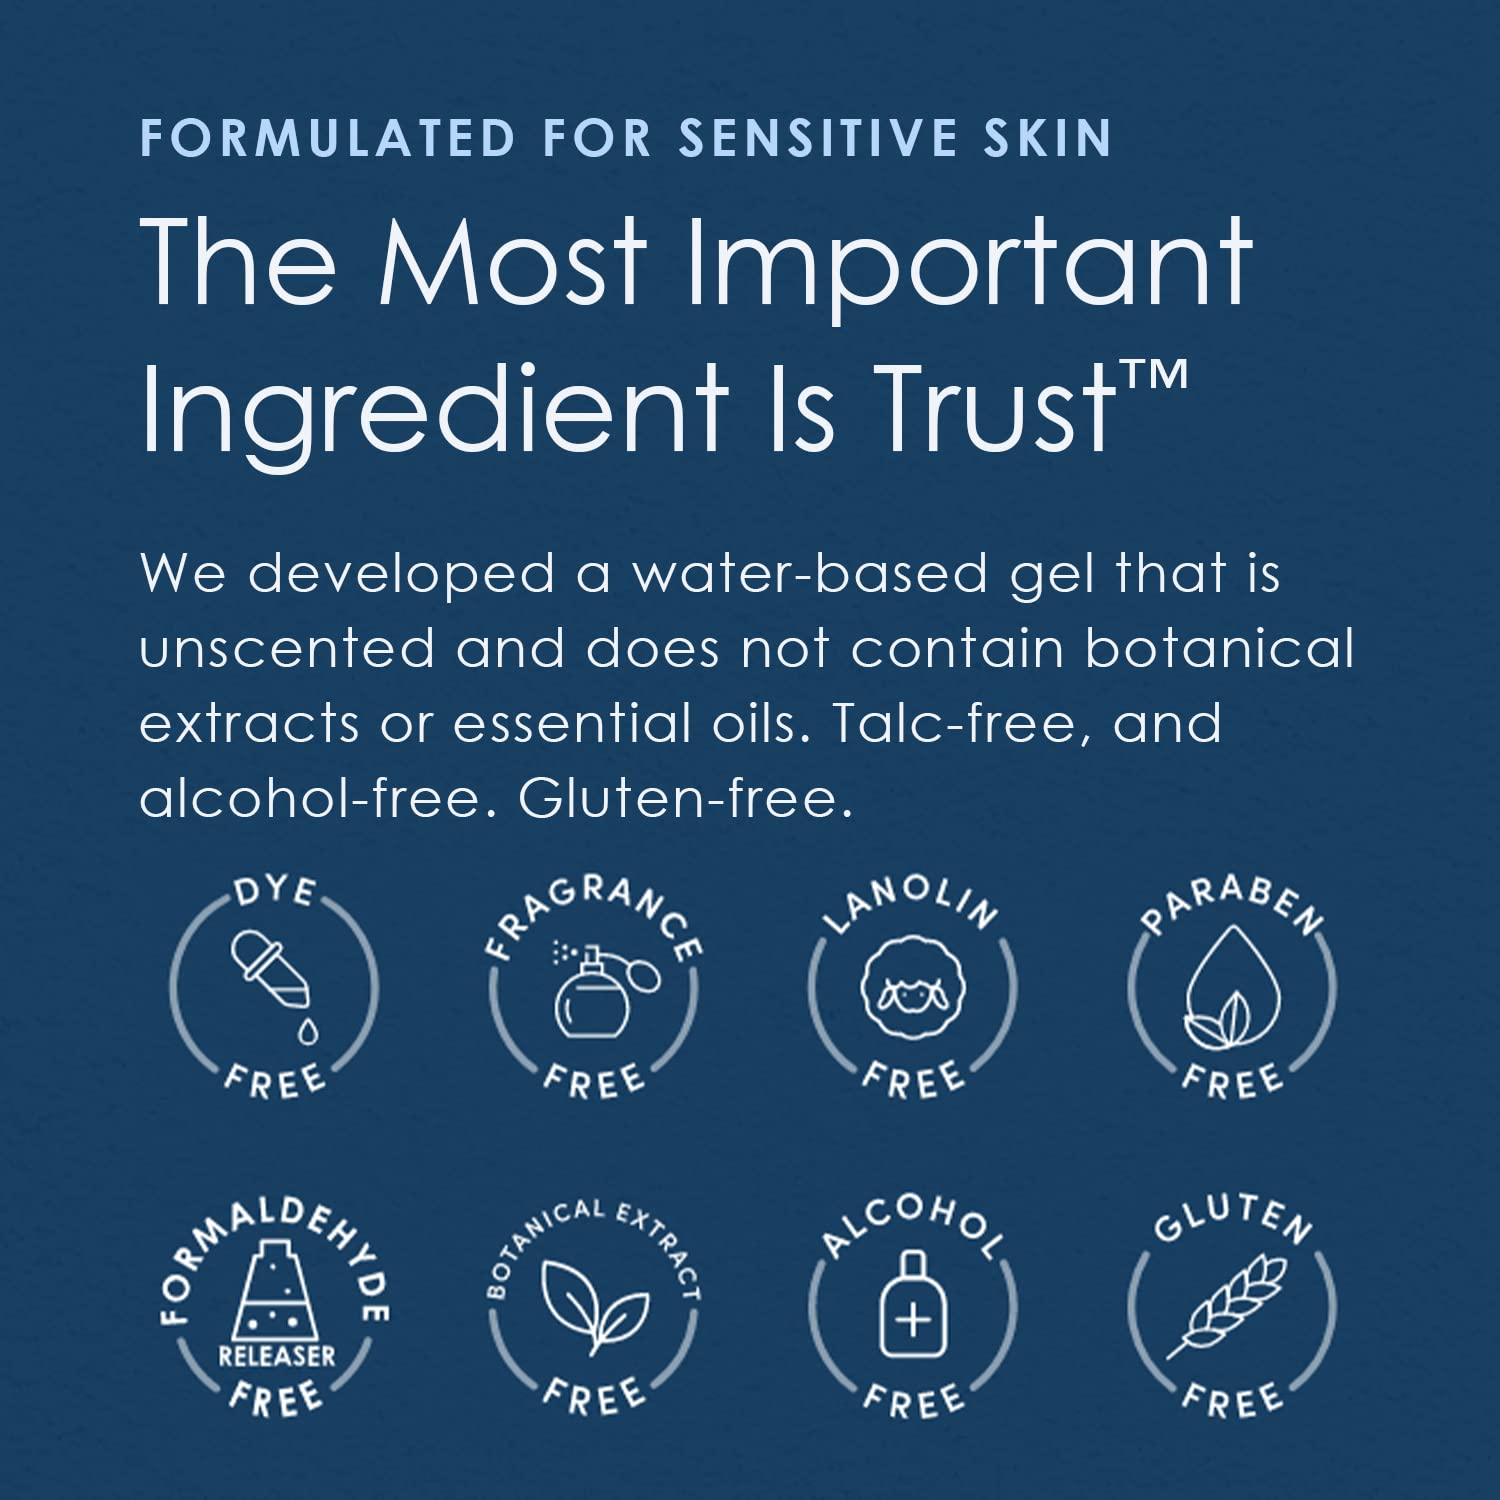 Vanicream Aluminum-Free gel Deodorant - 2 oz - Unscented Formula for Sensitive Skin